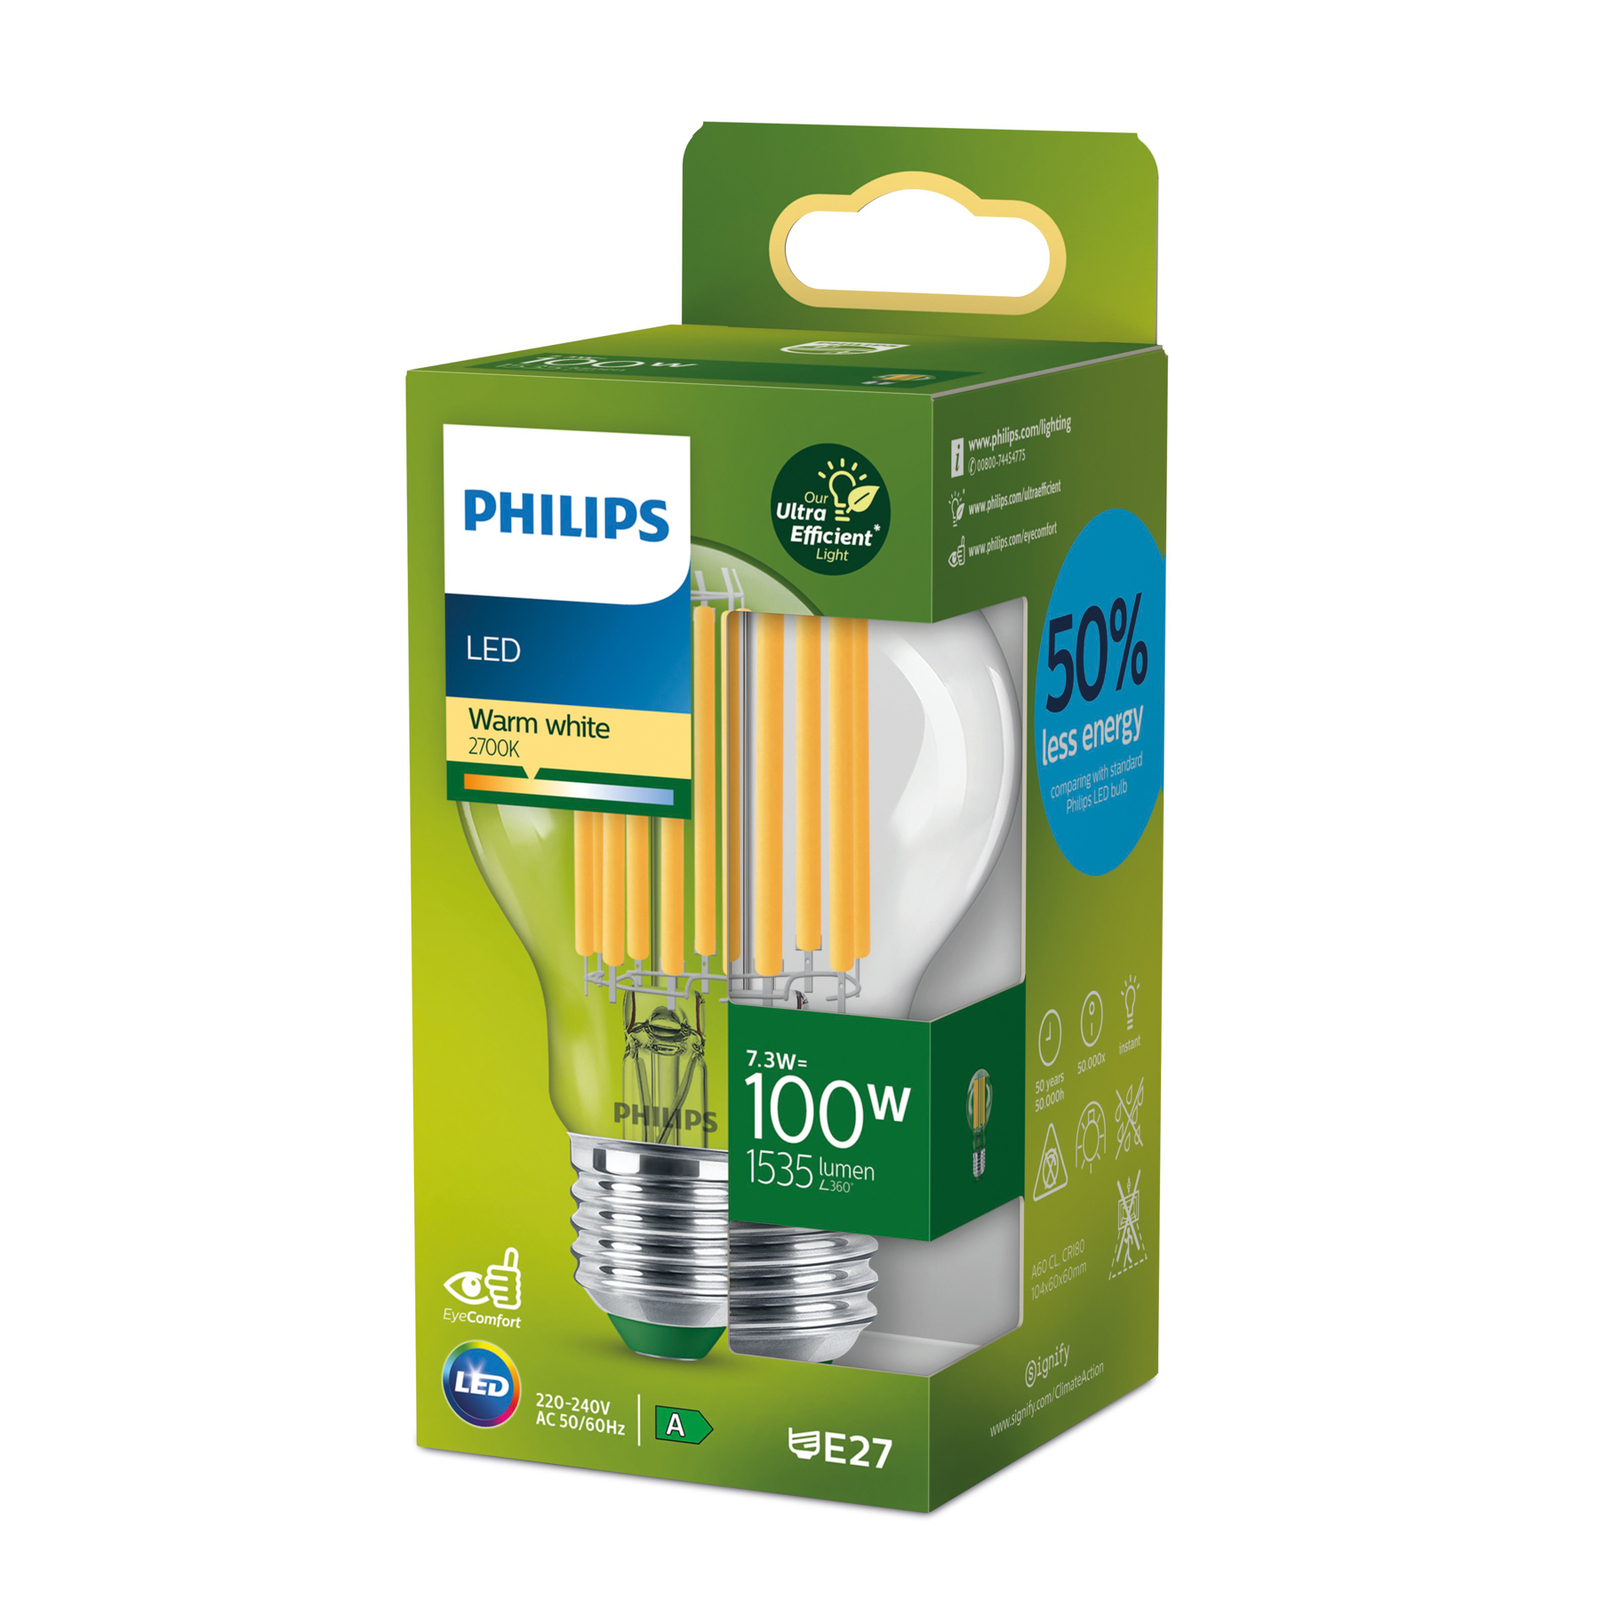 Philips E27 LED-lampa A60 7,3W 1535lm 2 700K klar